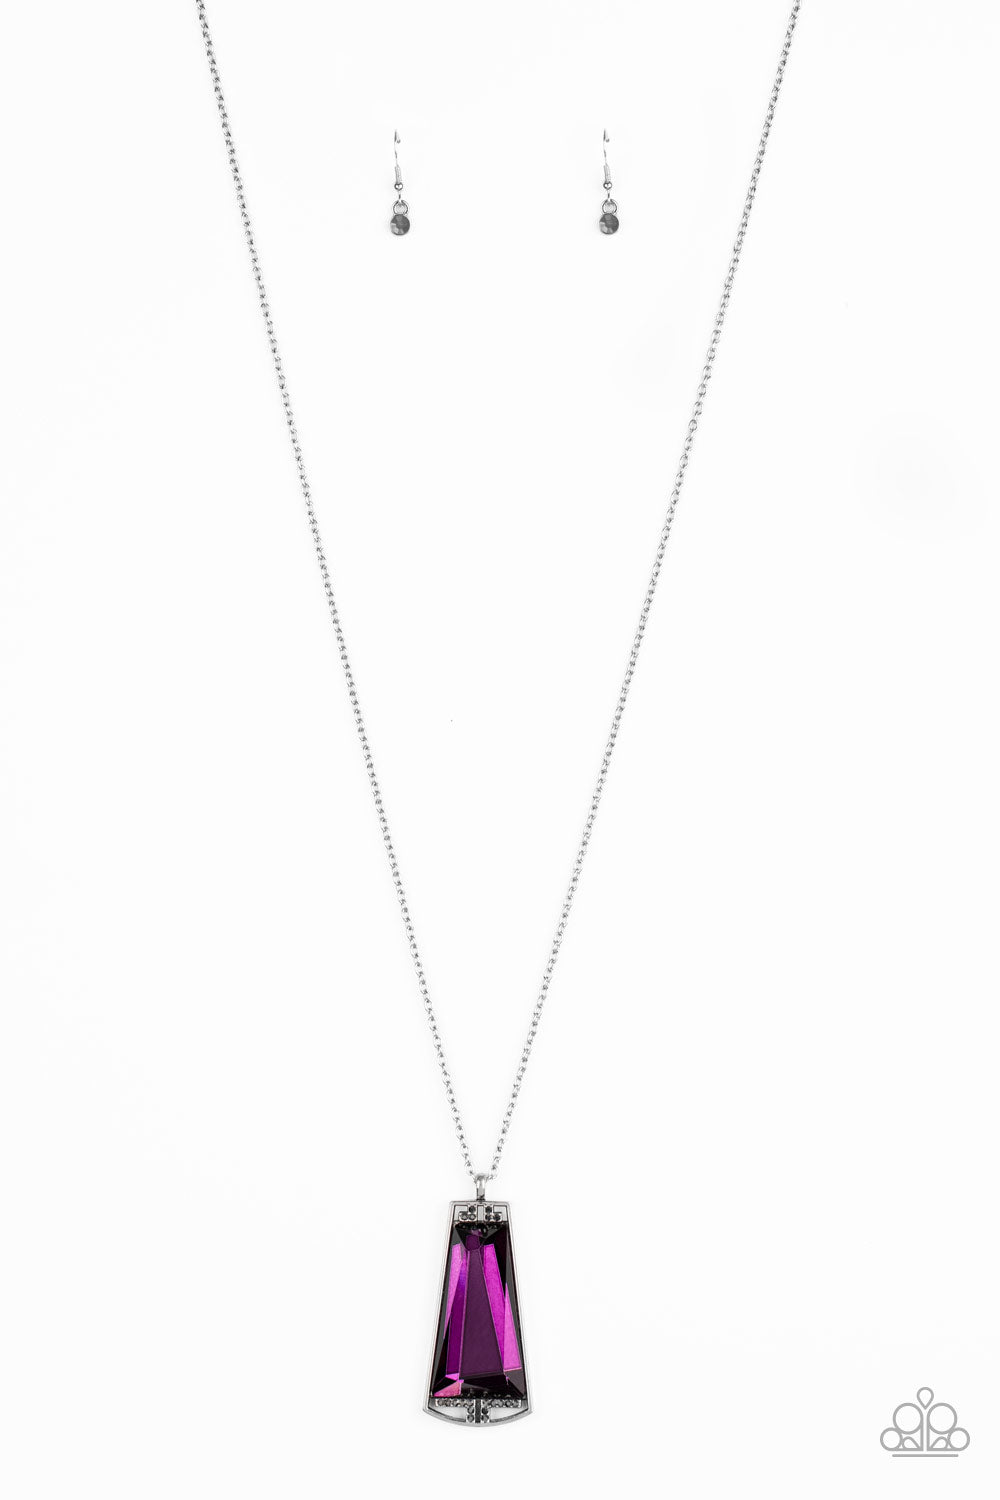 paparazzi-accessories-empire-state-elegance-purple-necklace